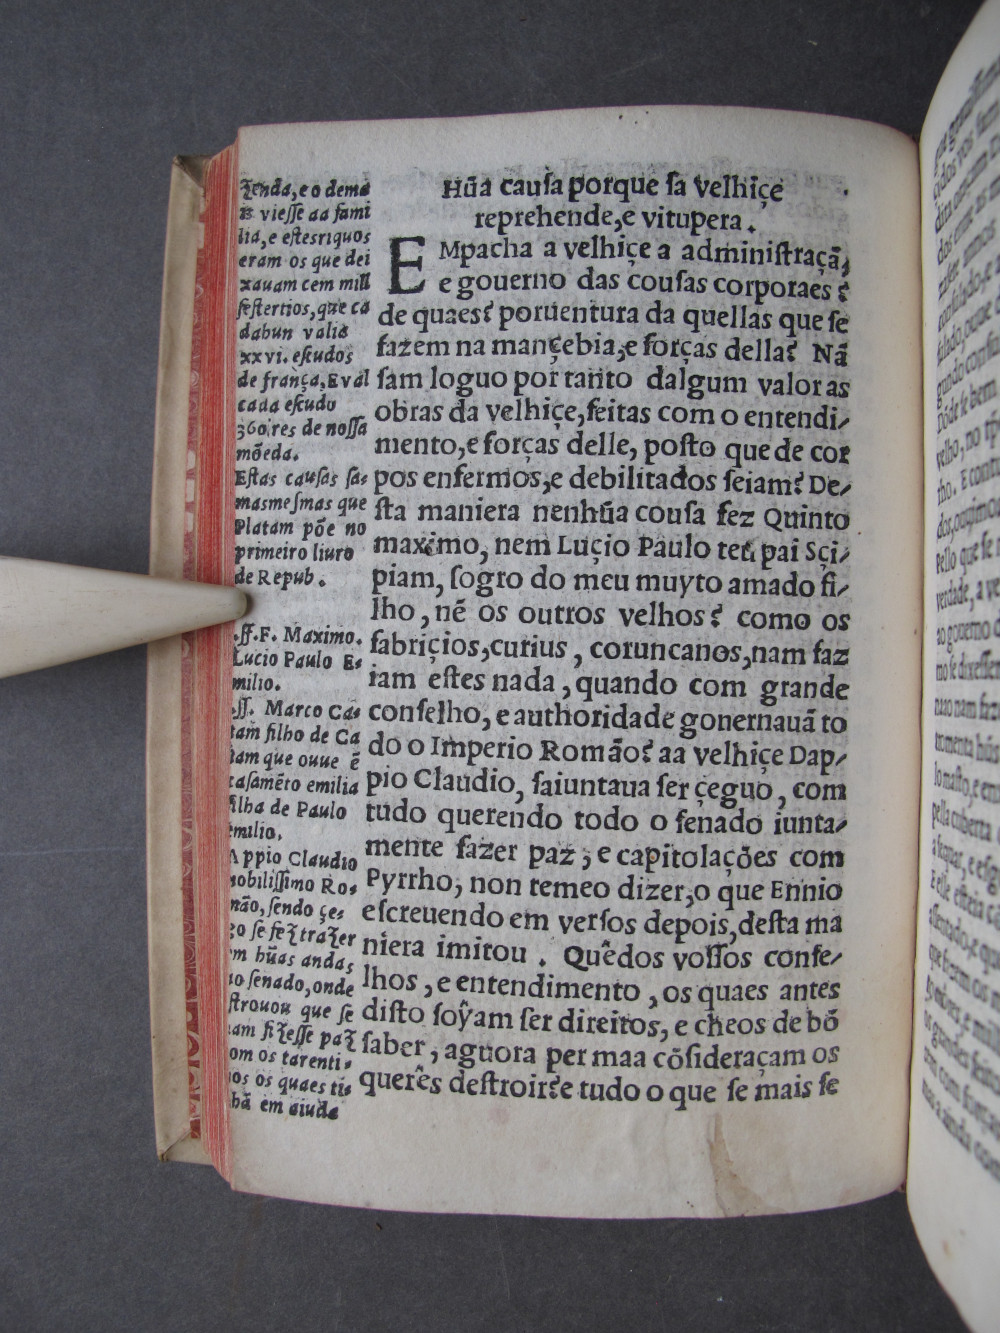 Folio B2 verso